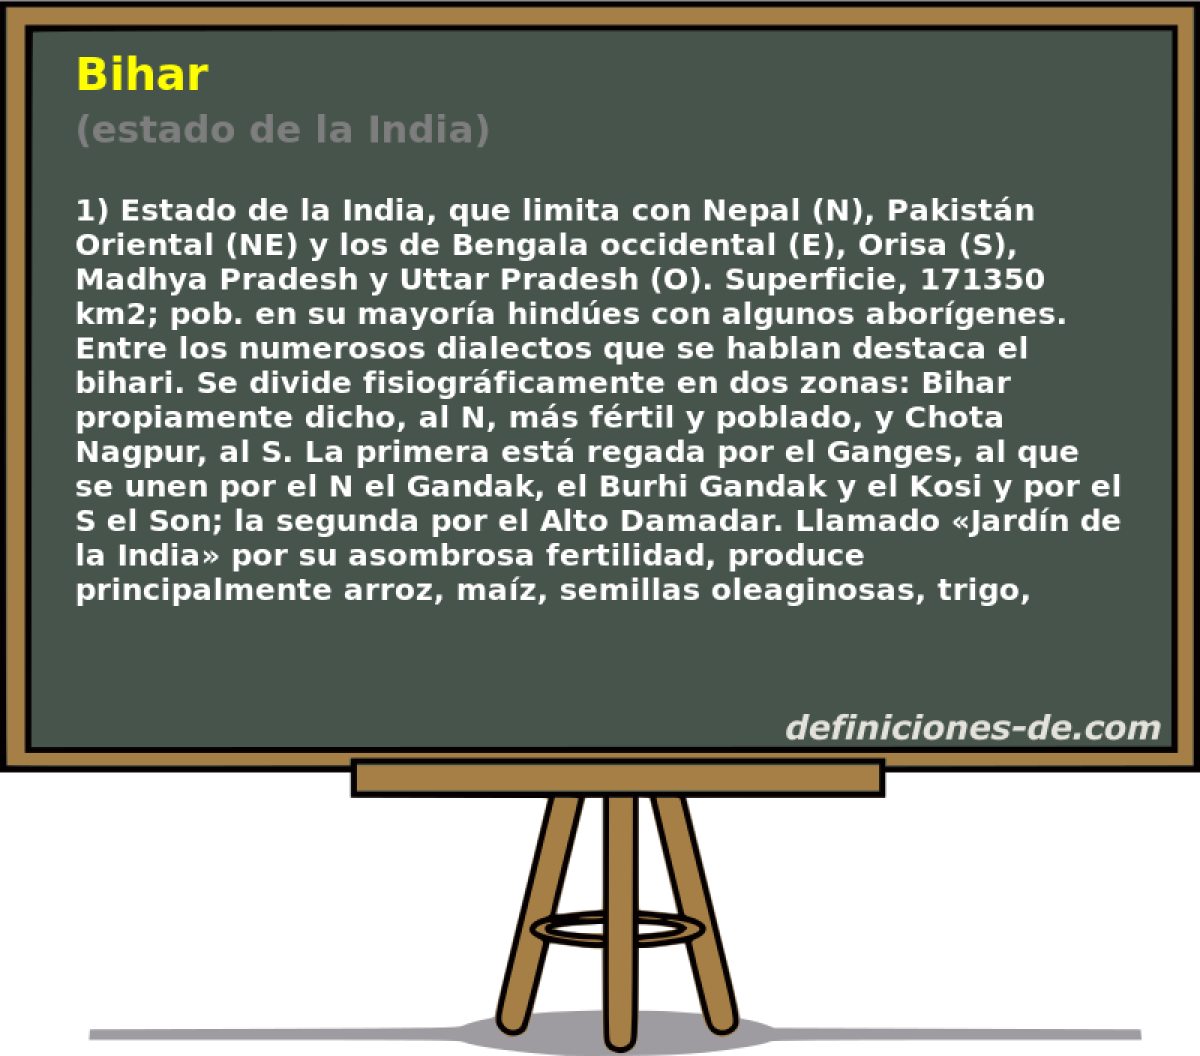 Bihar (estado de la India)